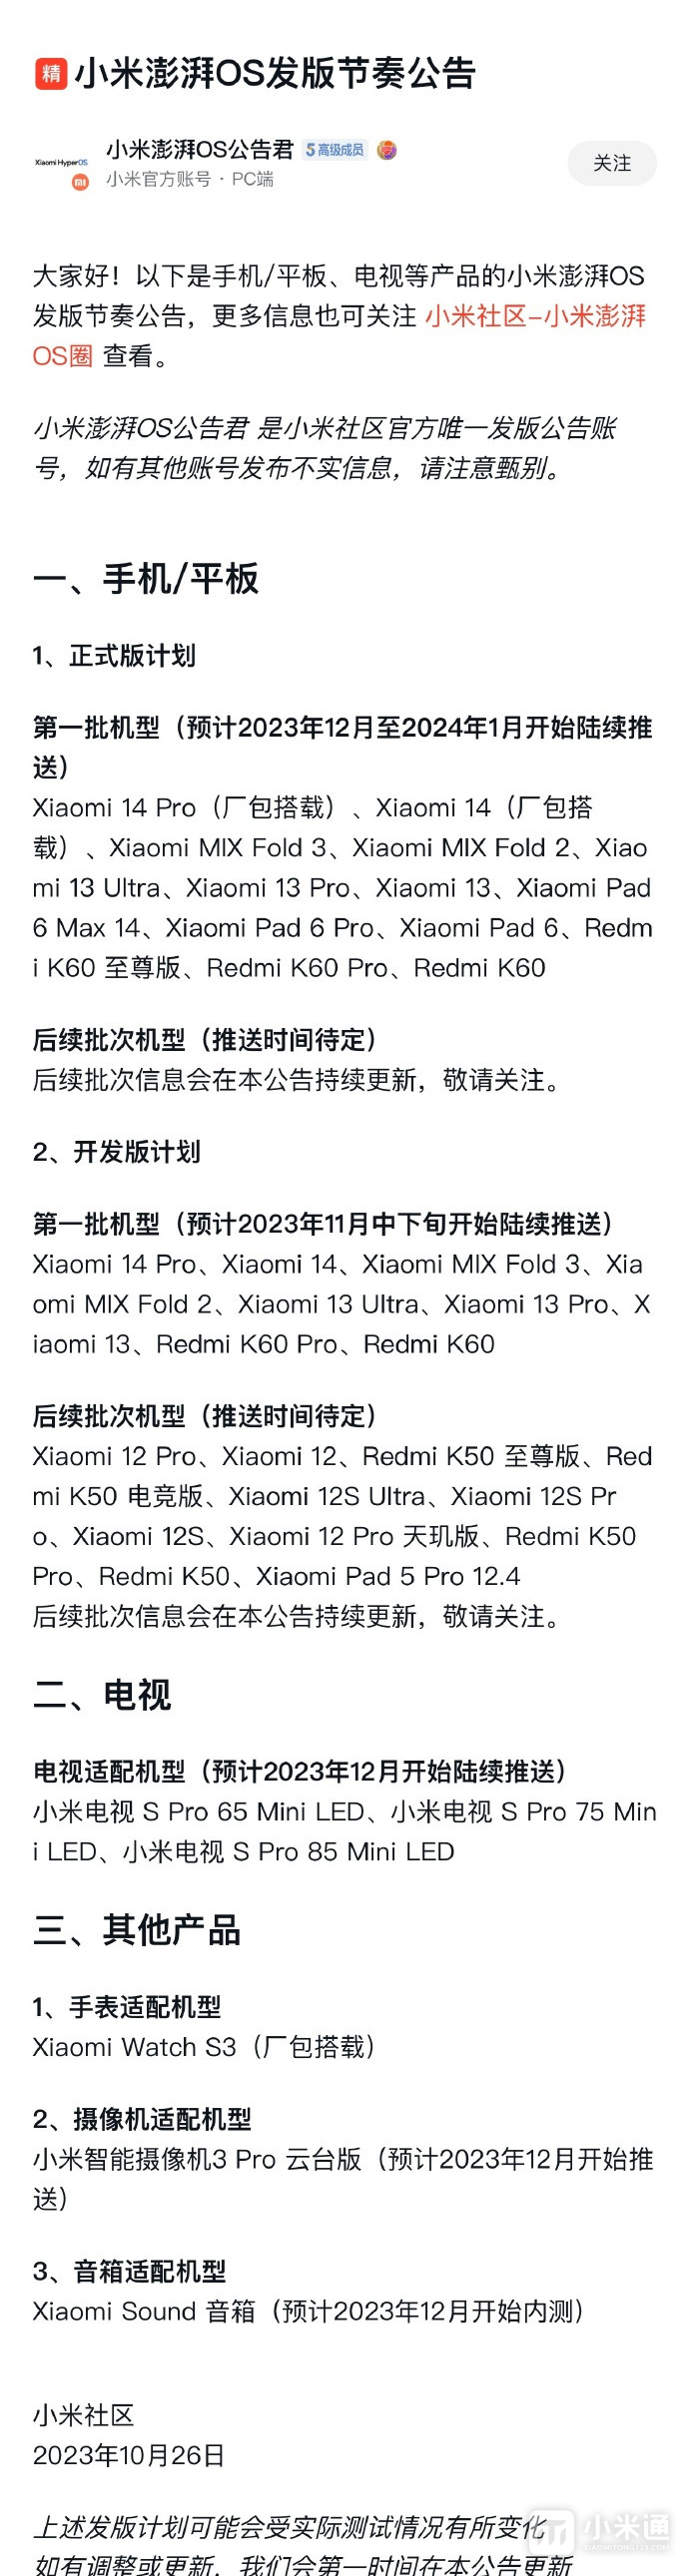 Redmi K50 Pro如何升级澎湃OS